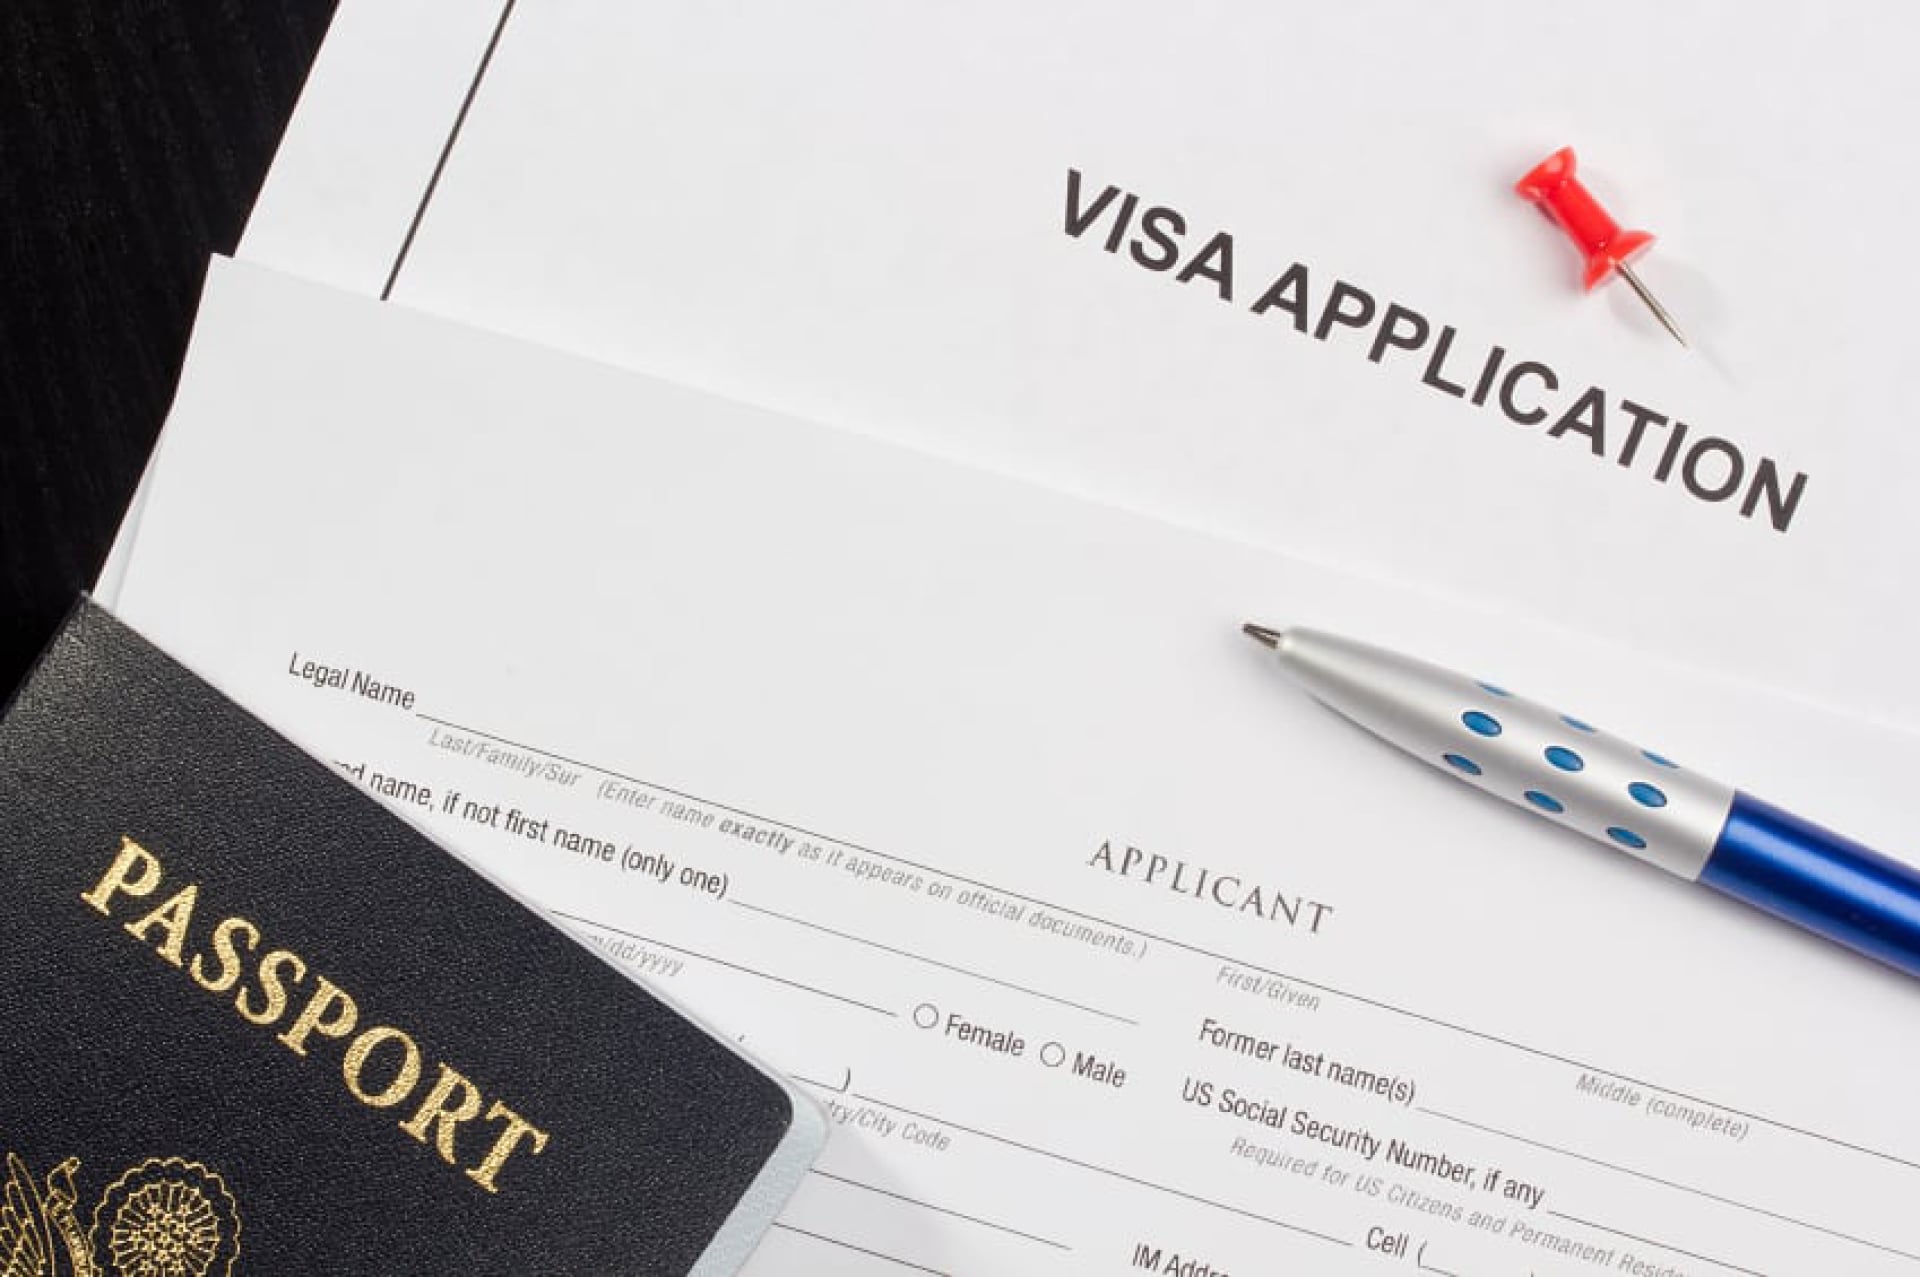 Visa application photo